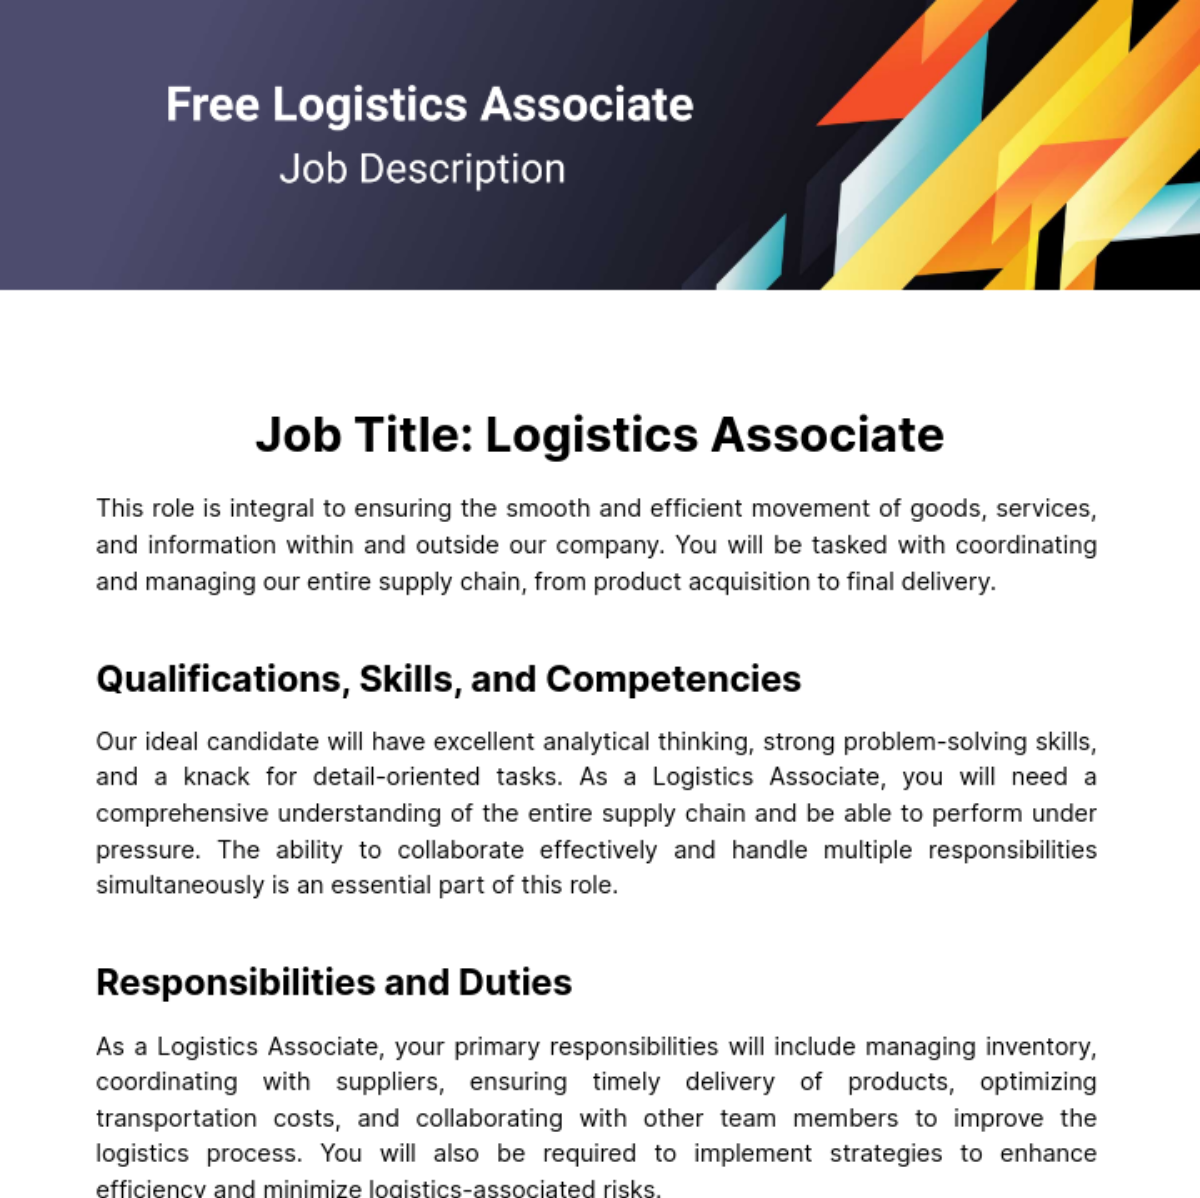 Free Logistics Associate Job Description Template